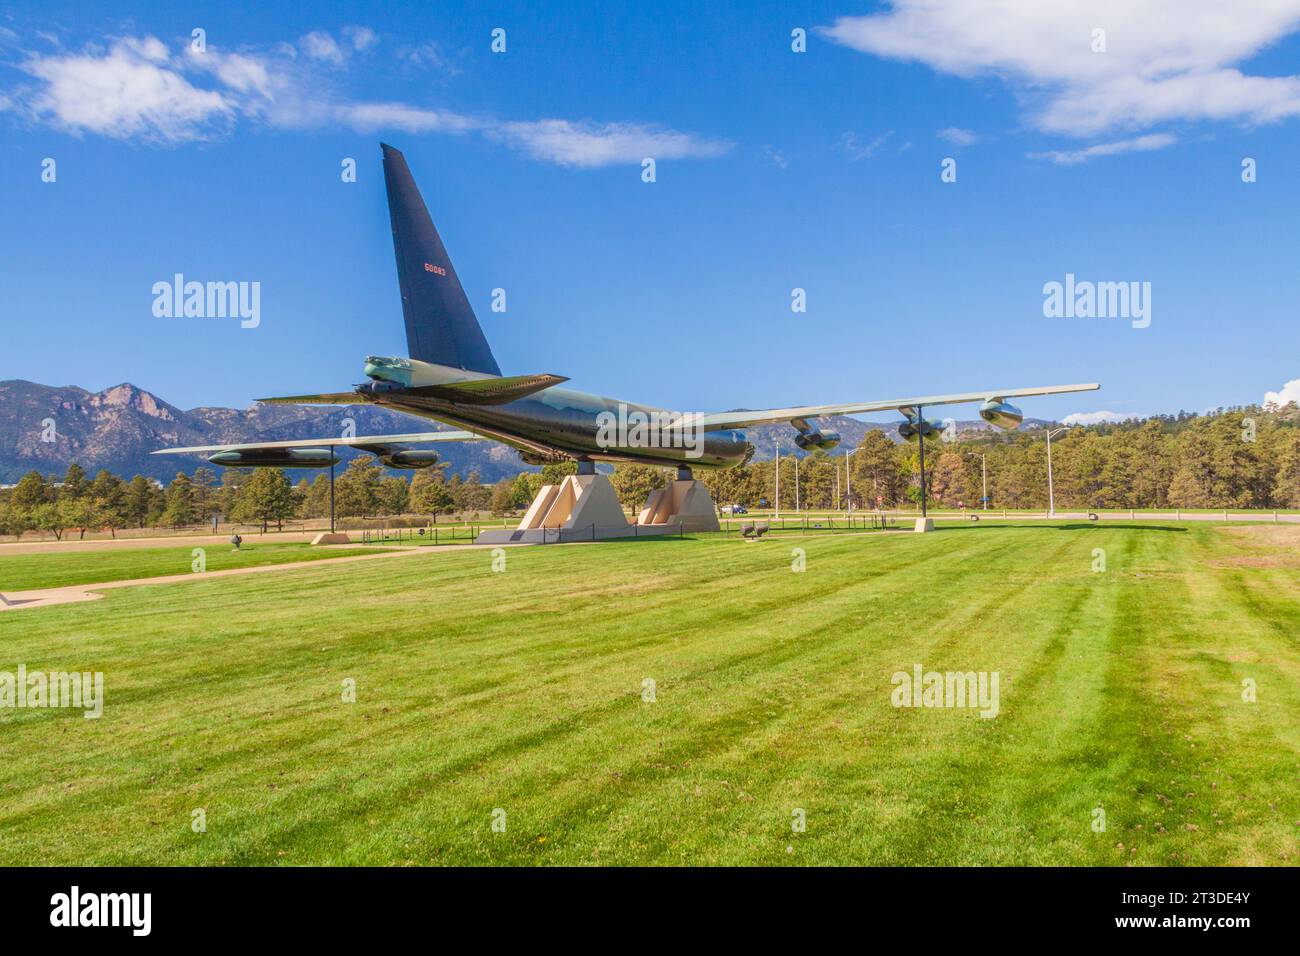 B-52 Bomber Flugzeug auf dem Display an der United States Air Force Academy in Colorado Springs, Colorado. Stockfoto